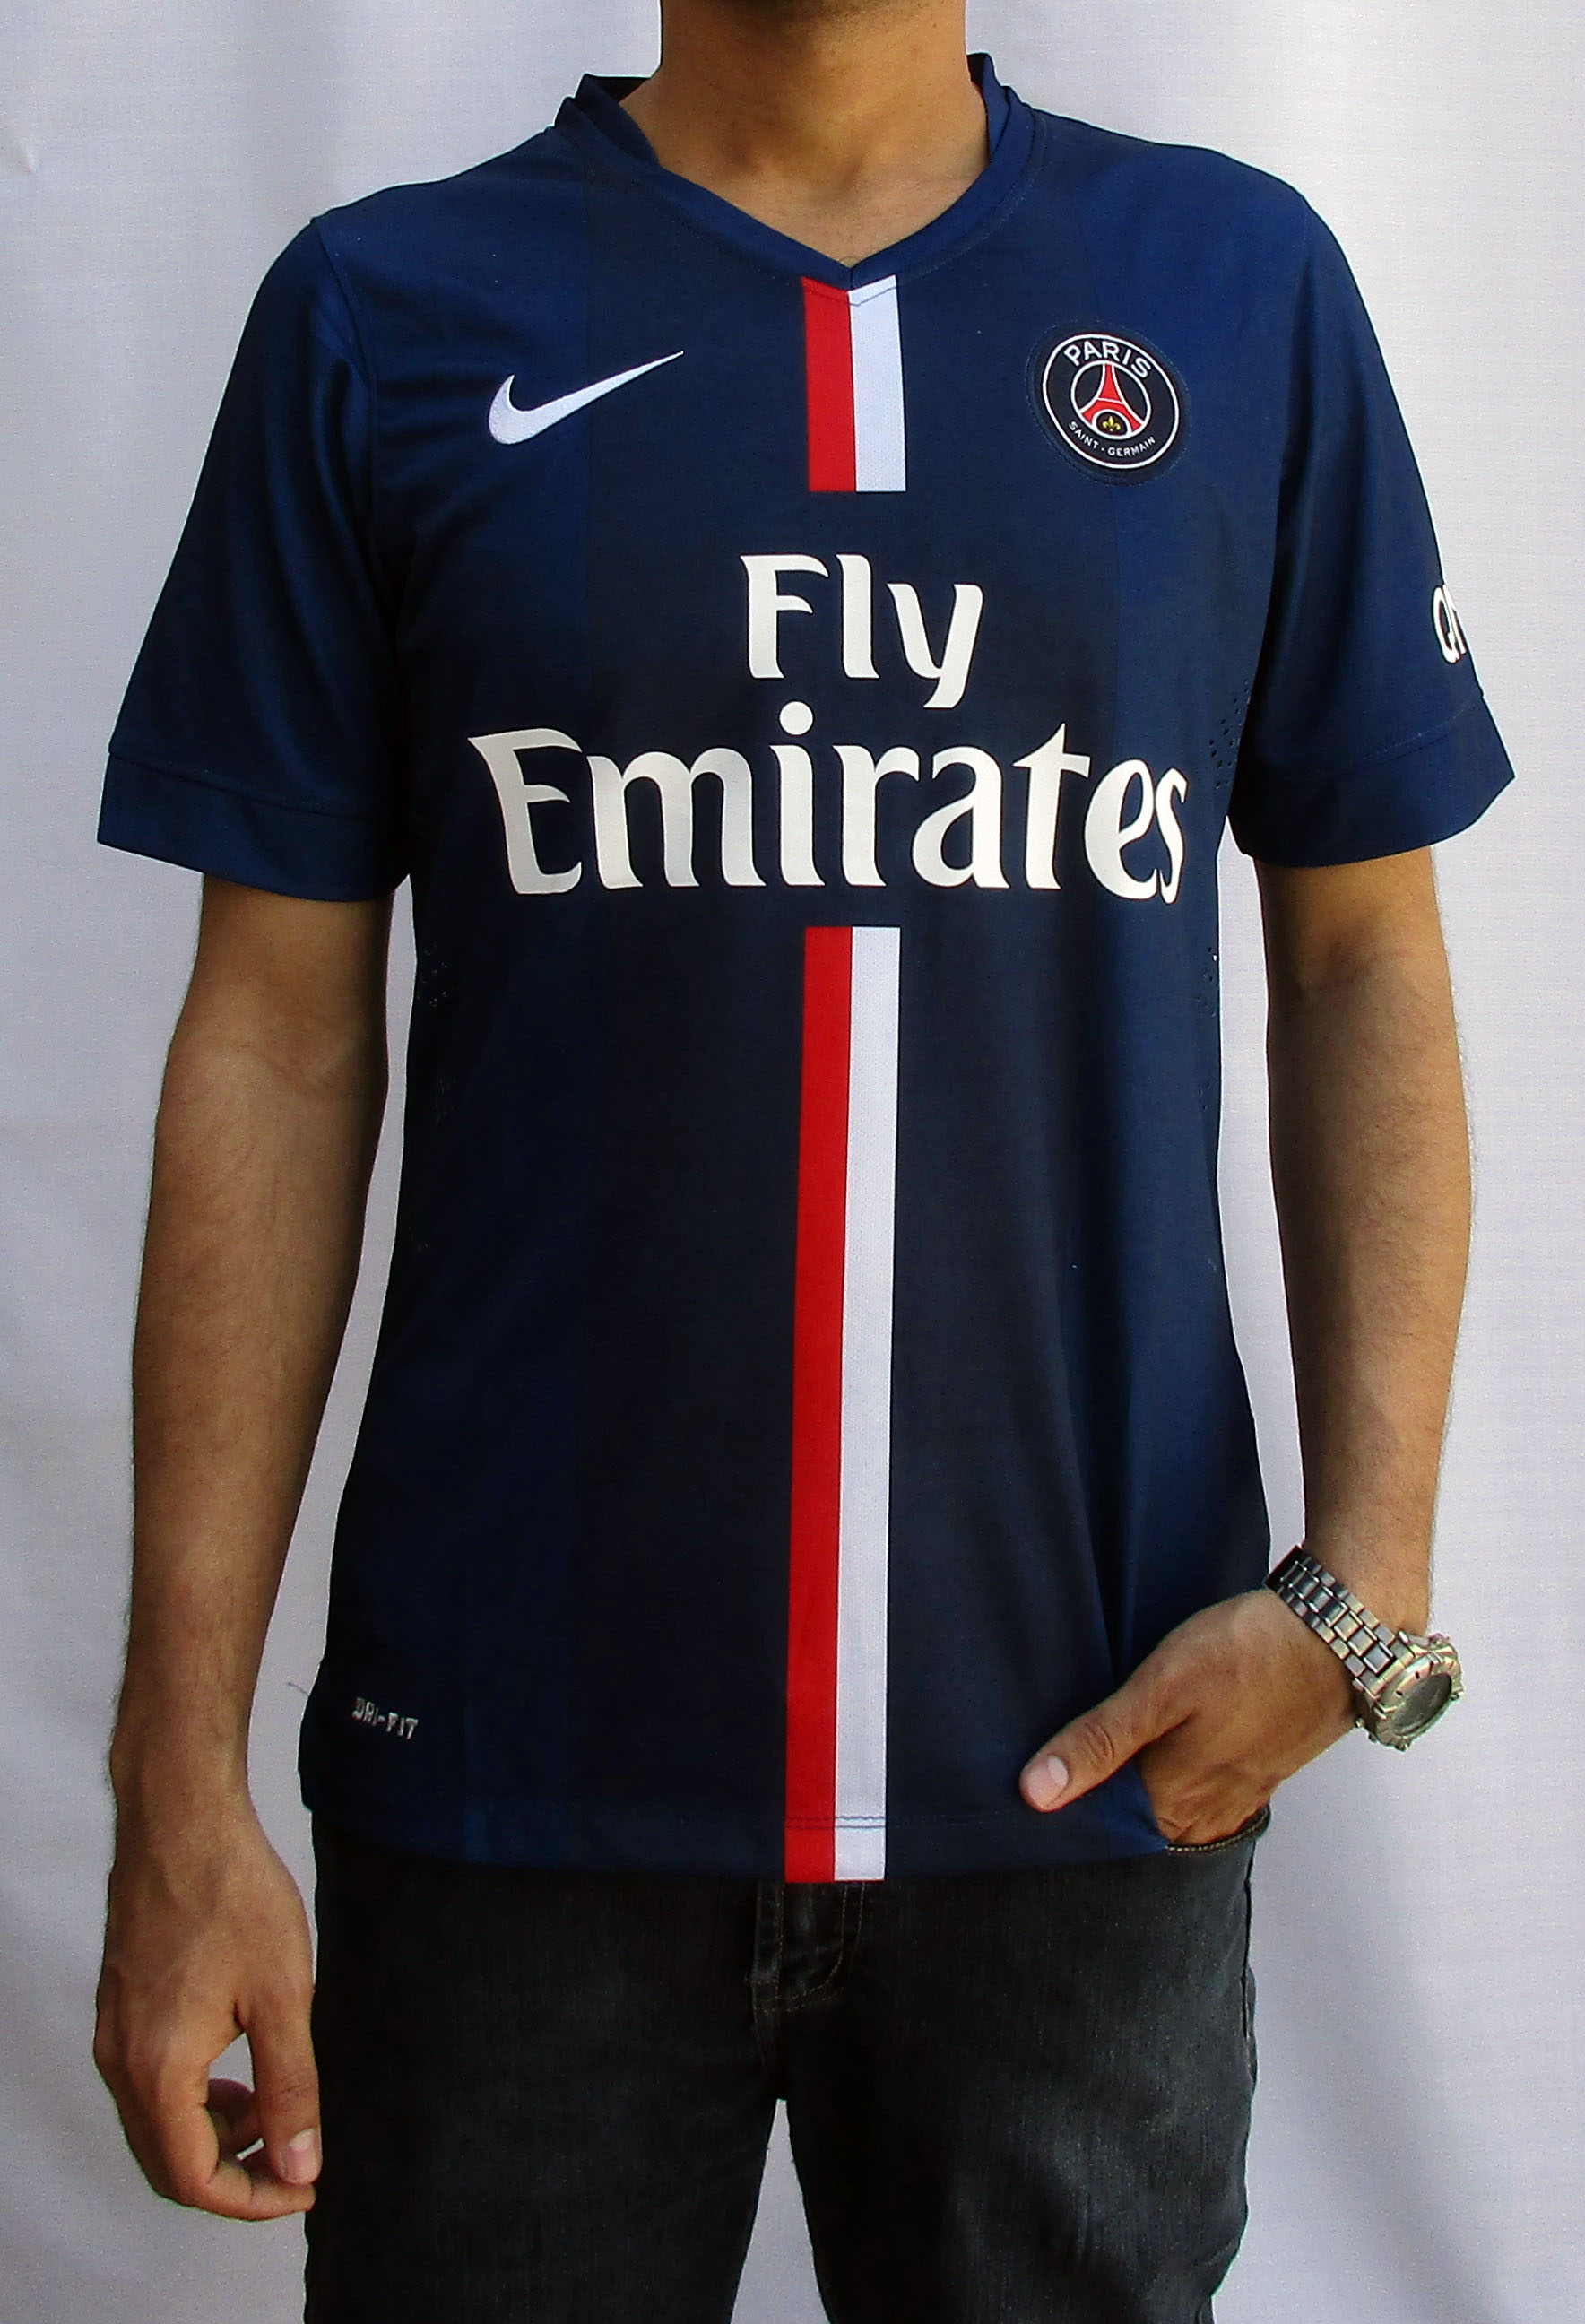 PSG Paris Saint Germain Football Club Branded Quality Jersey Men